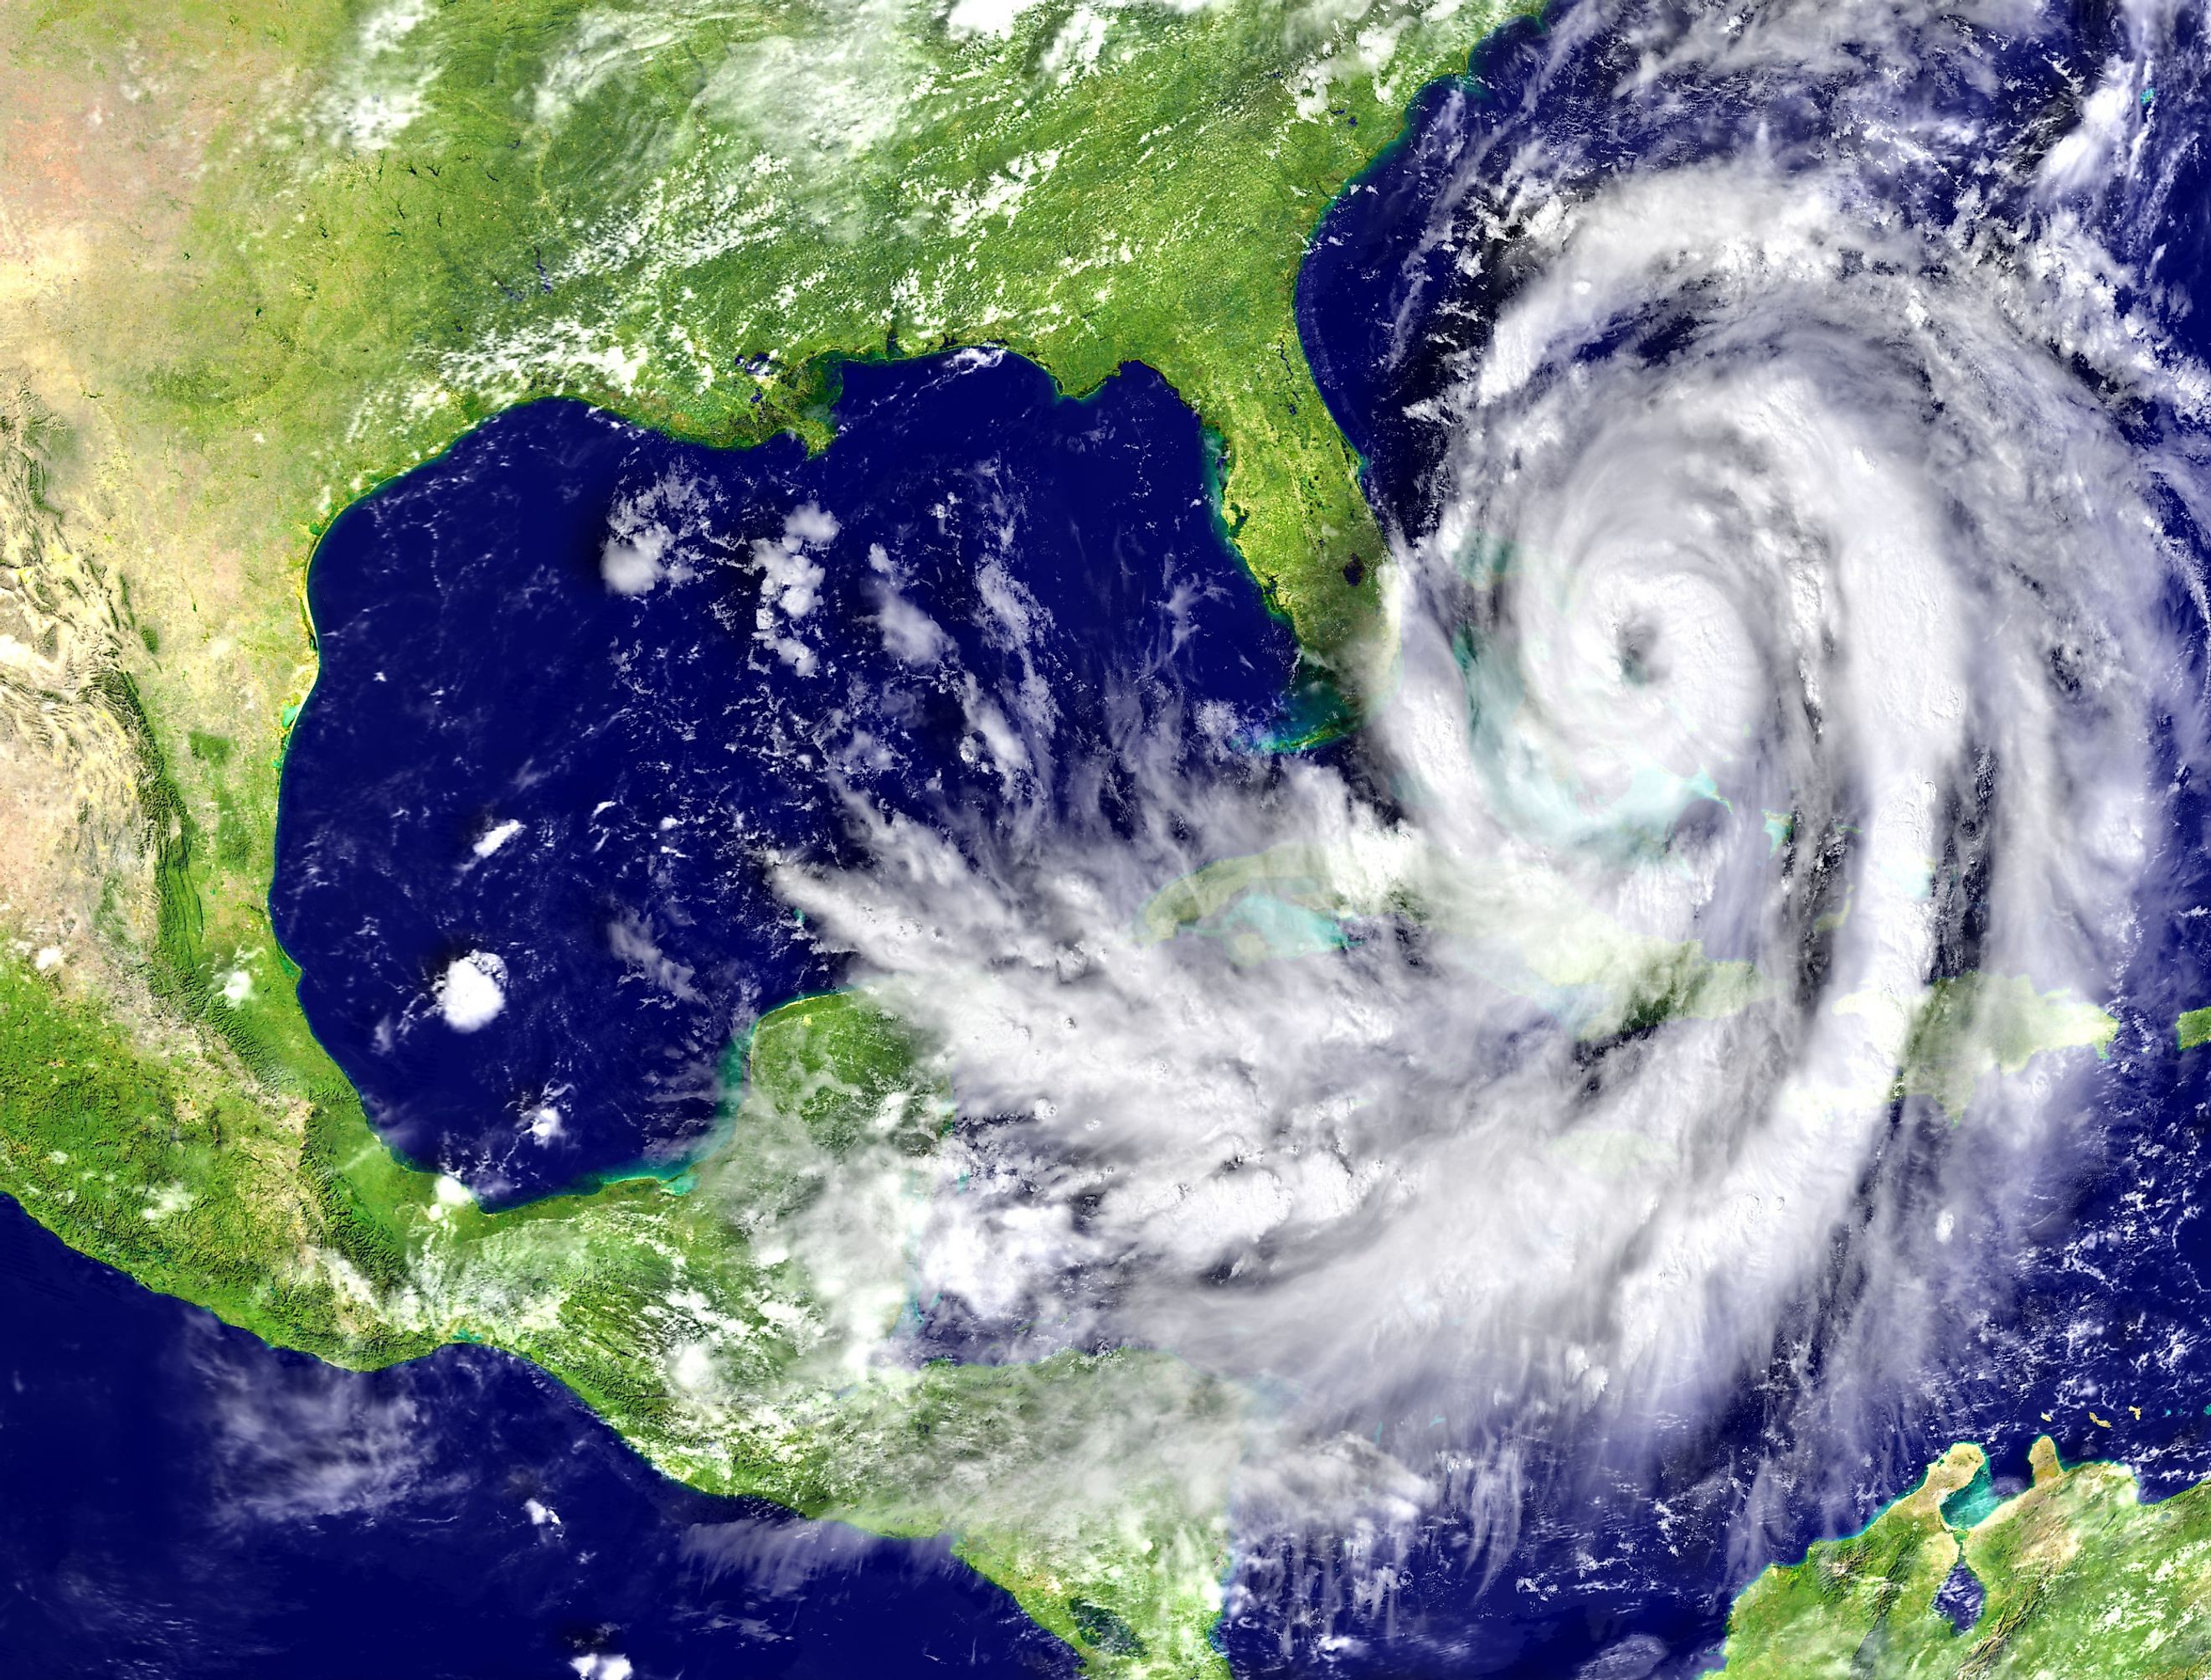 Disastrous hurricane on Florida coastline. Image credit Harvepino via shutterstock